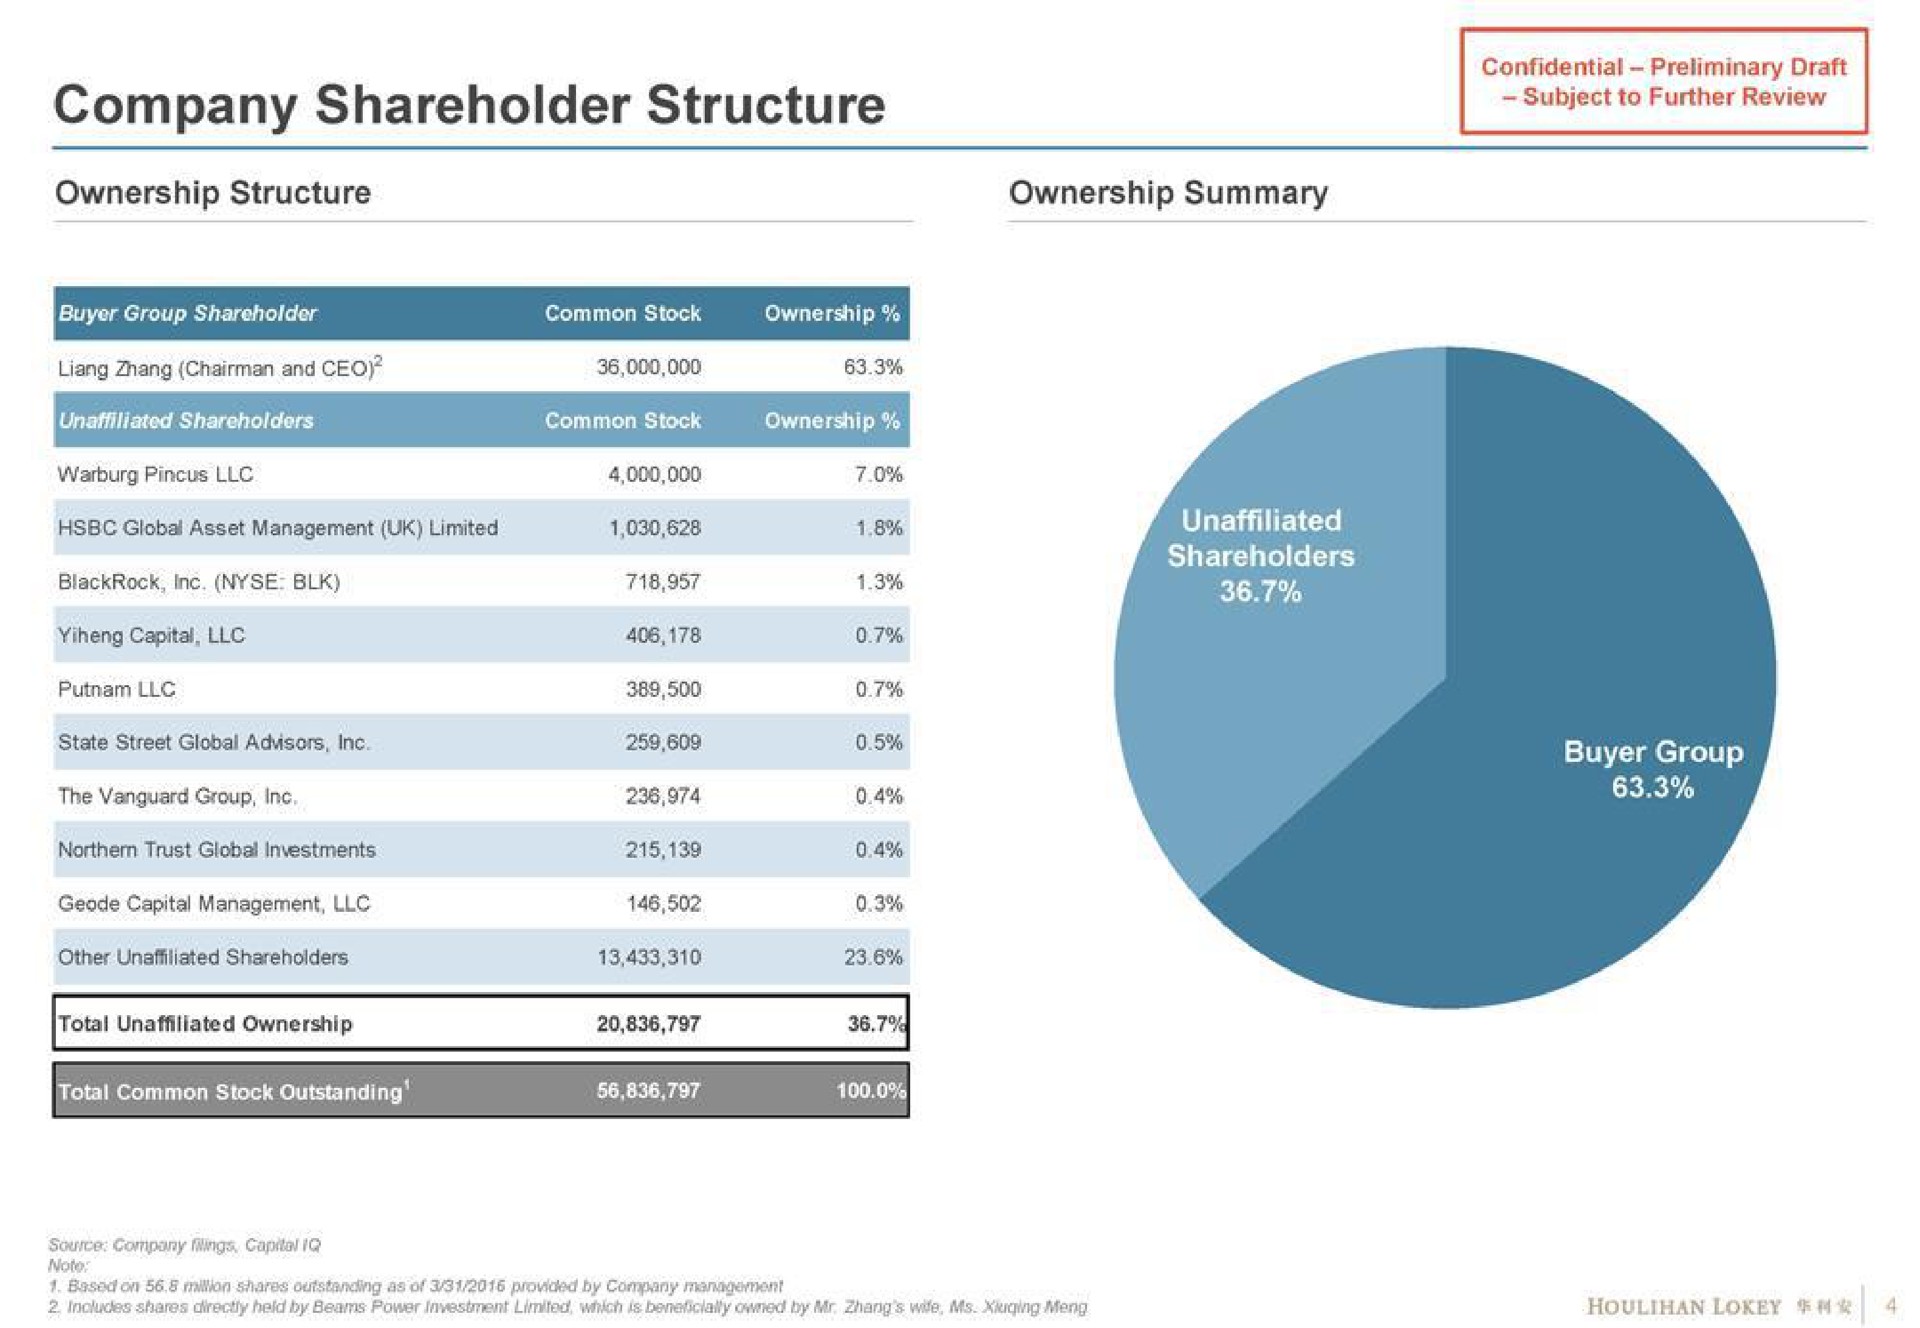 company shareholder structure eta ownership structure ownership summary global asset management limited unaffiliated shareholders the vanguard group | Houlihan Lokey